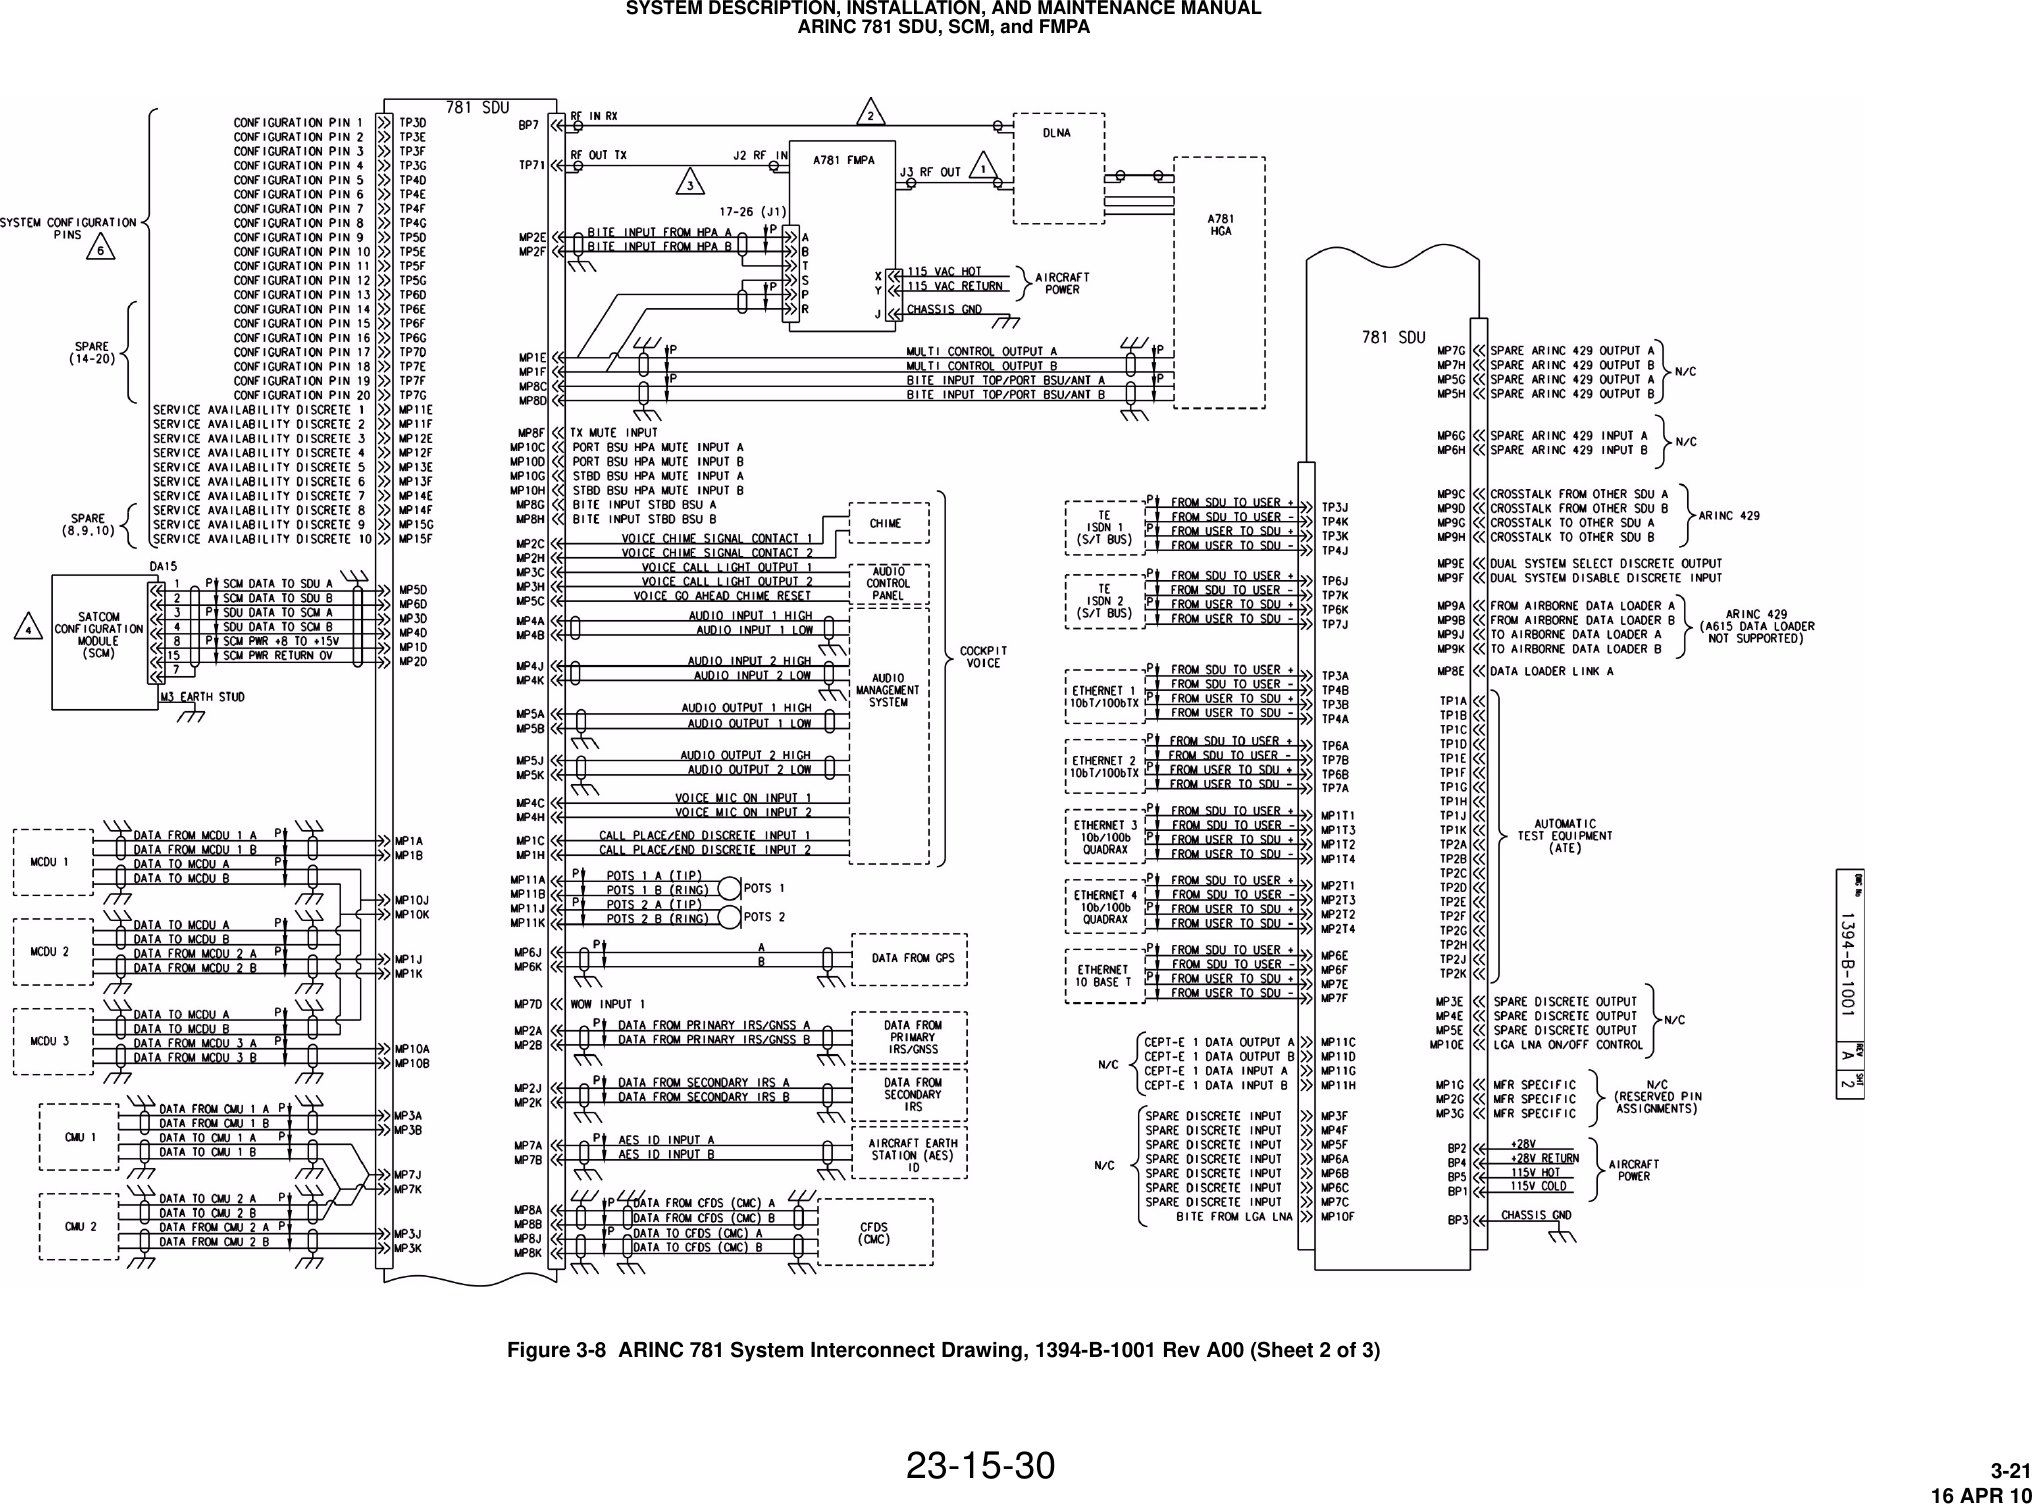 SYSTEM DESCRIPTION, INSTALLATION, AND MAINTENANCE MANUALARINC 781 SDU, SCM, and FMPA23-15-30 3-2116 APR 10Figure 3-8  ARINC 781 System Interconnect Drawing, 1394-B-1001 Rev A00 (Sheet 2 of 3)